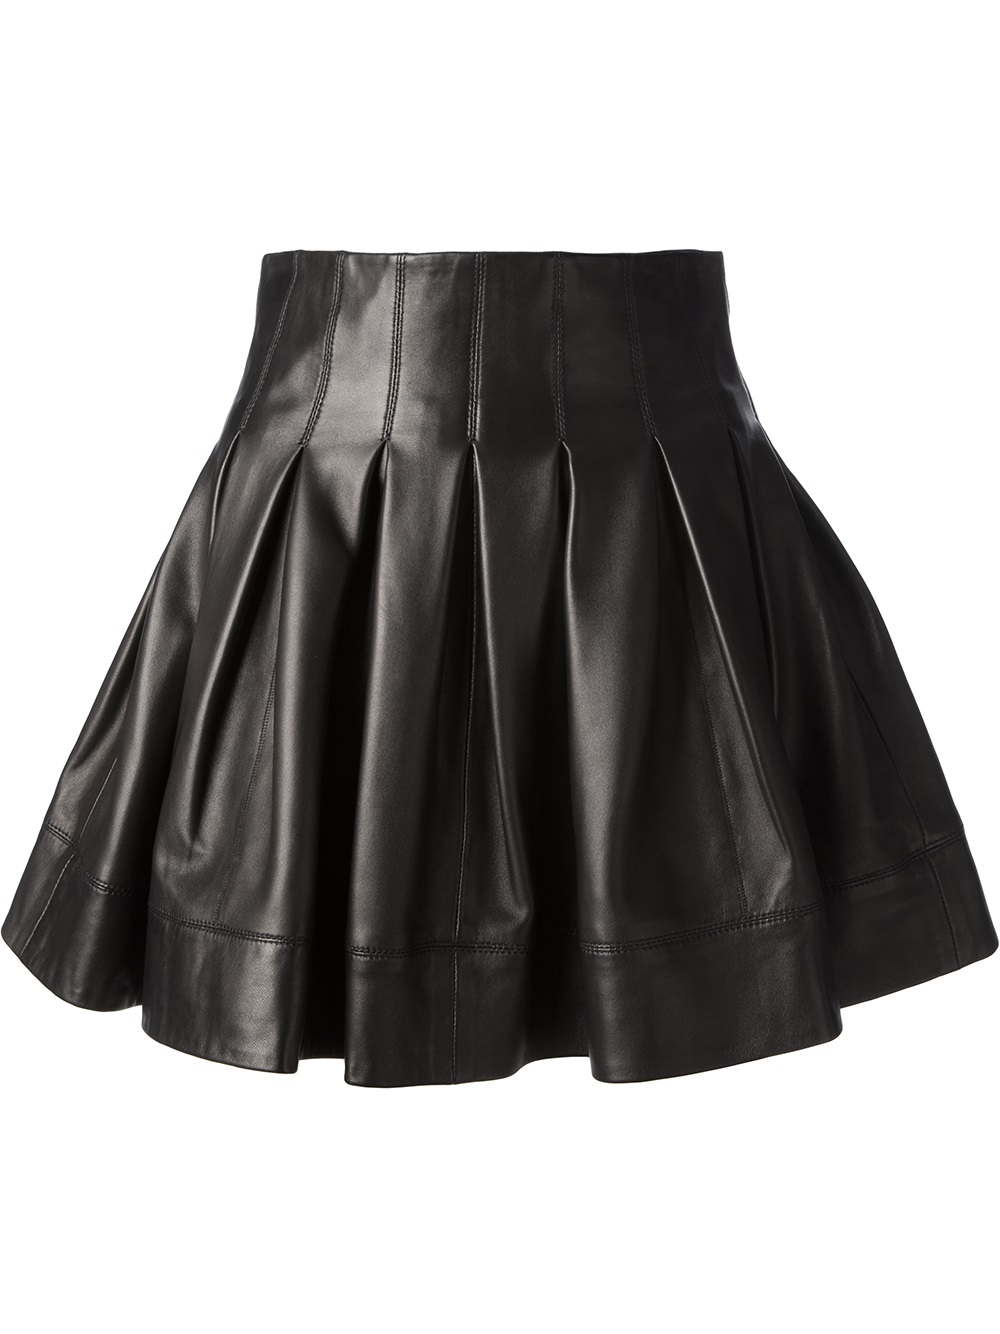 Inspired Style,Fashion & Beauty: Gemma Chan Mini Skirt